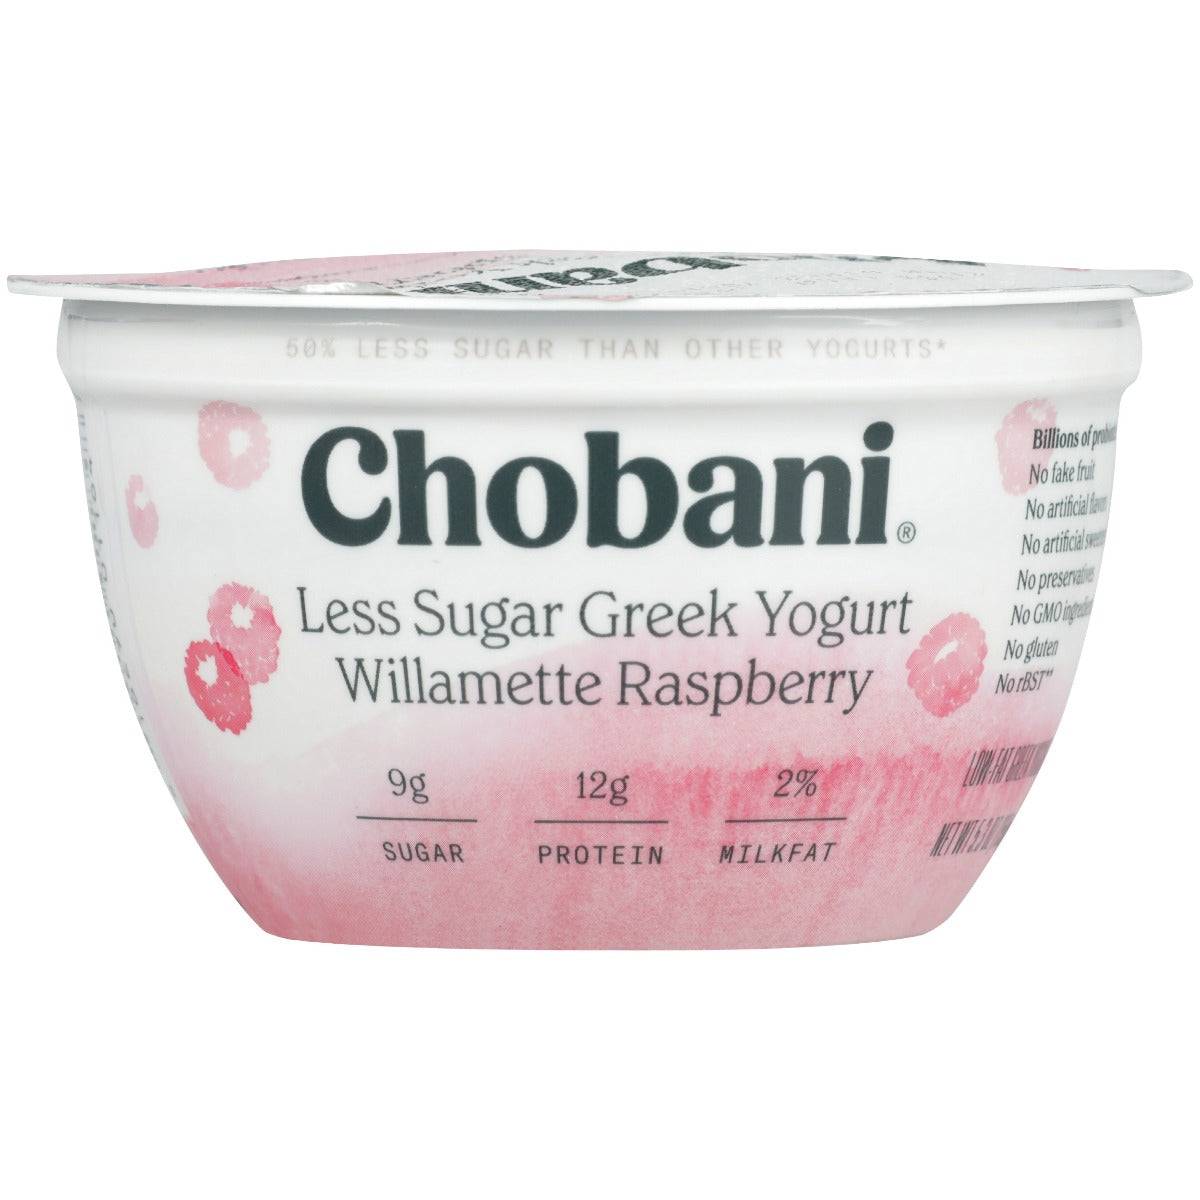 CHOBANI: Less Sugar Greek Yogurt Willamette Raspberry, 5.30 oz - Vending Business Solutions